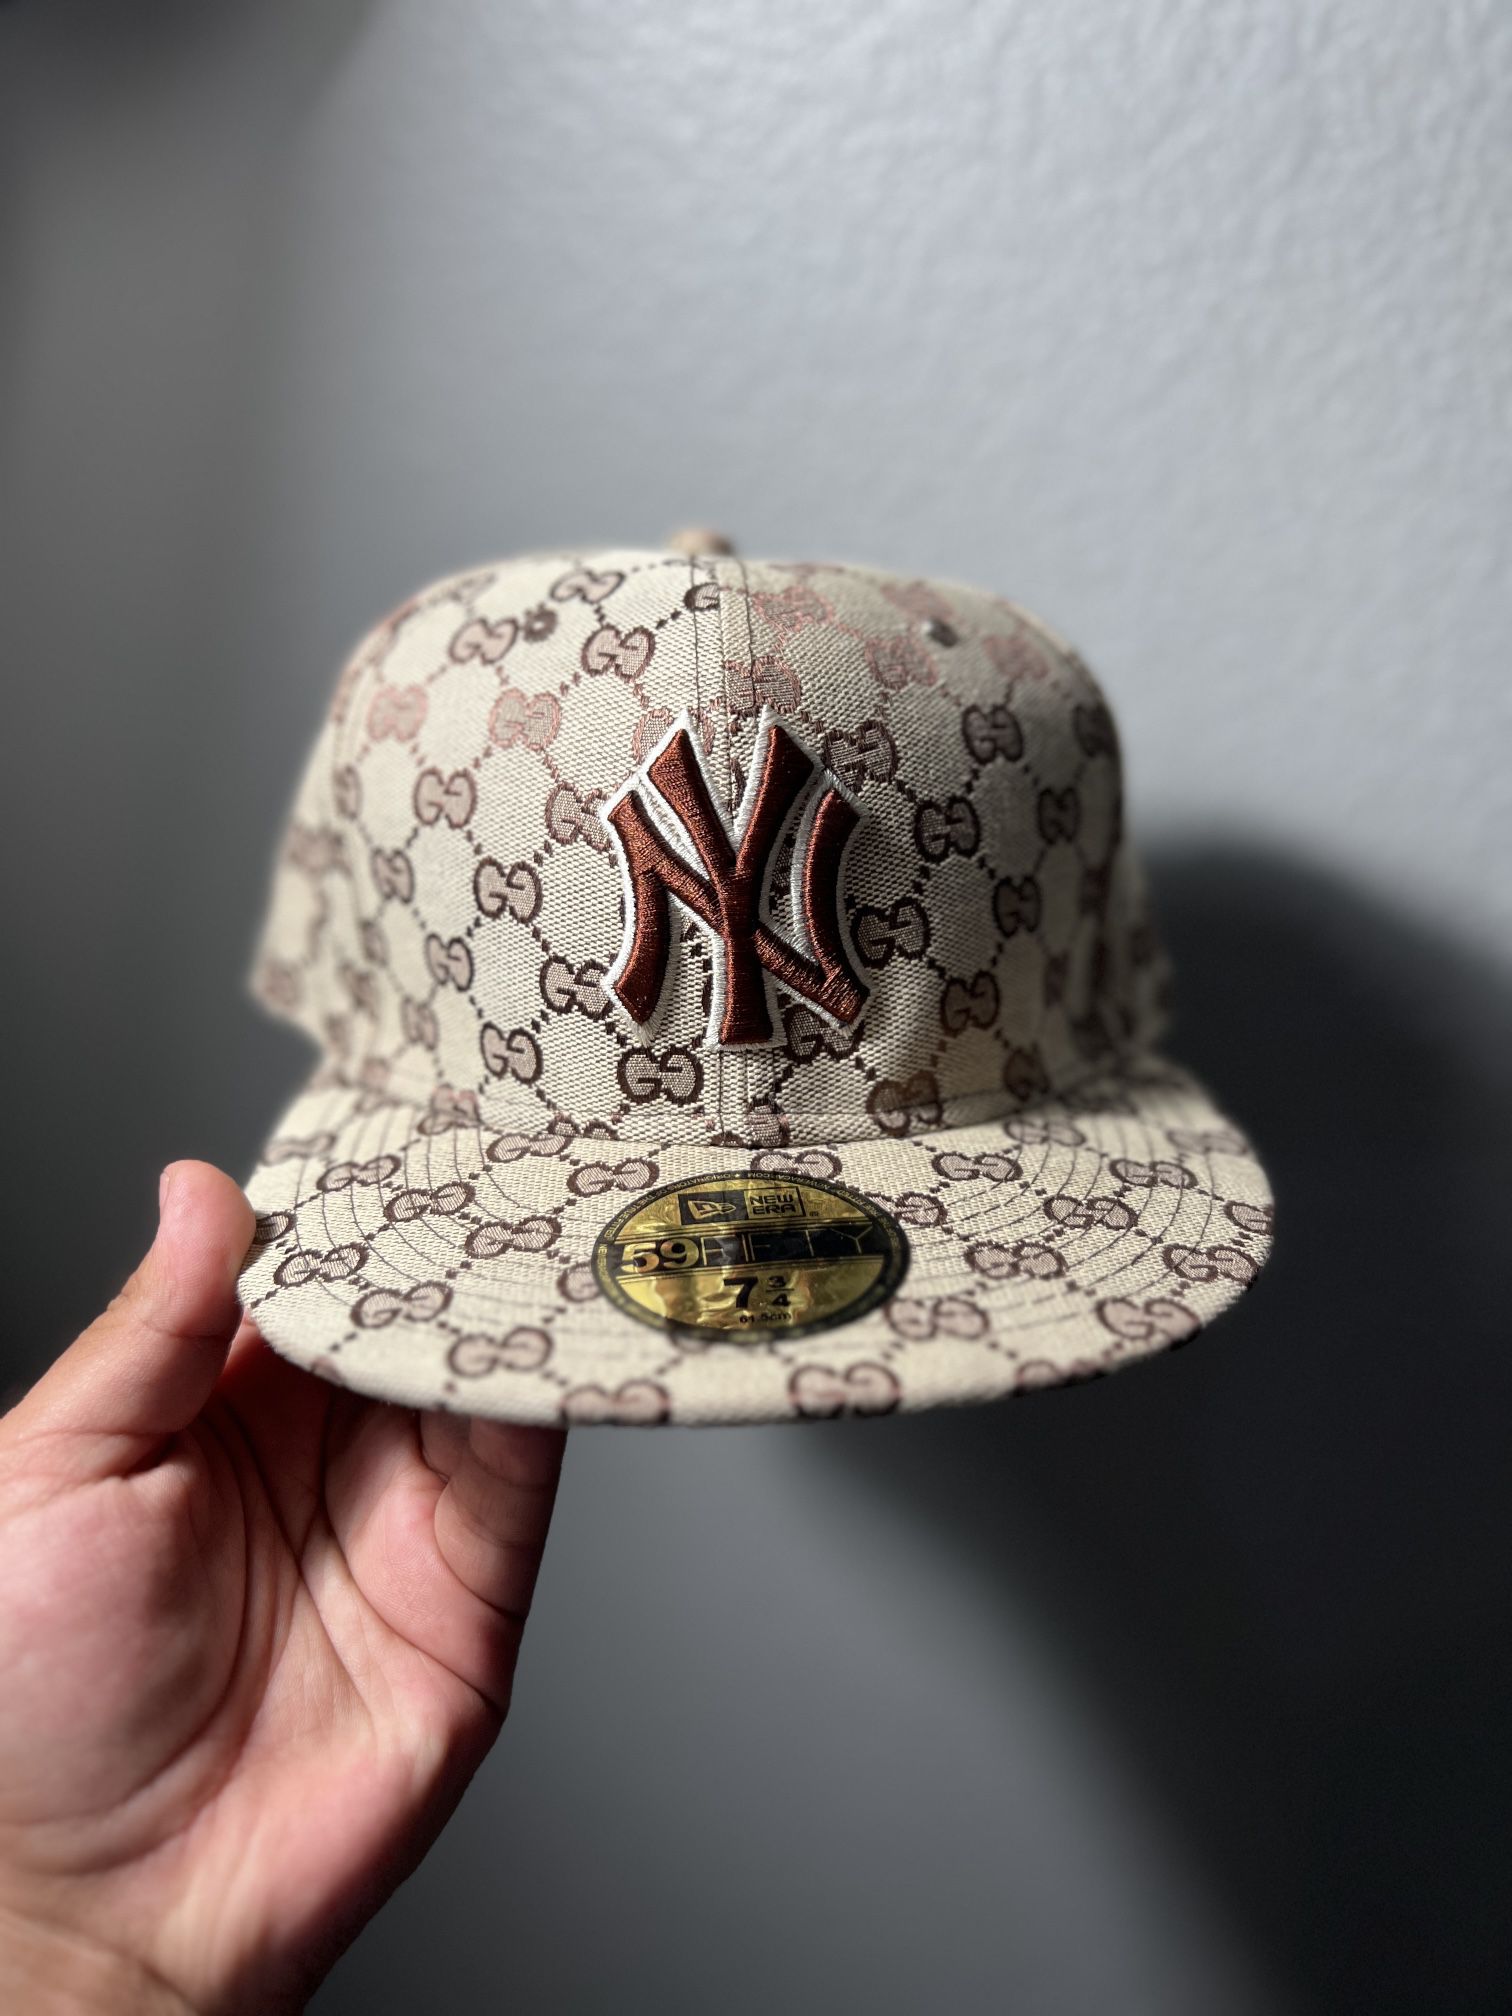 Yankees Gucci Hat